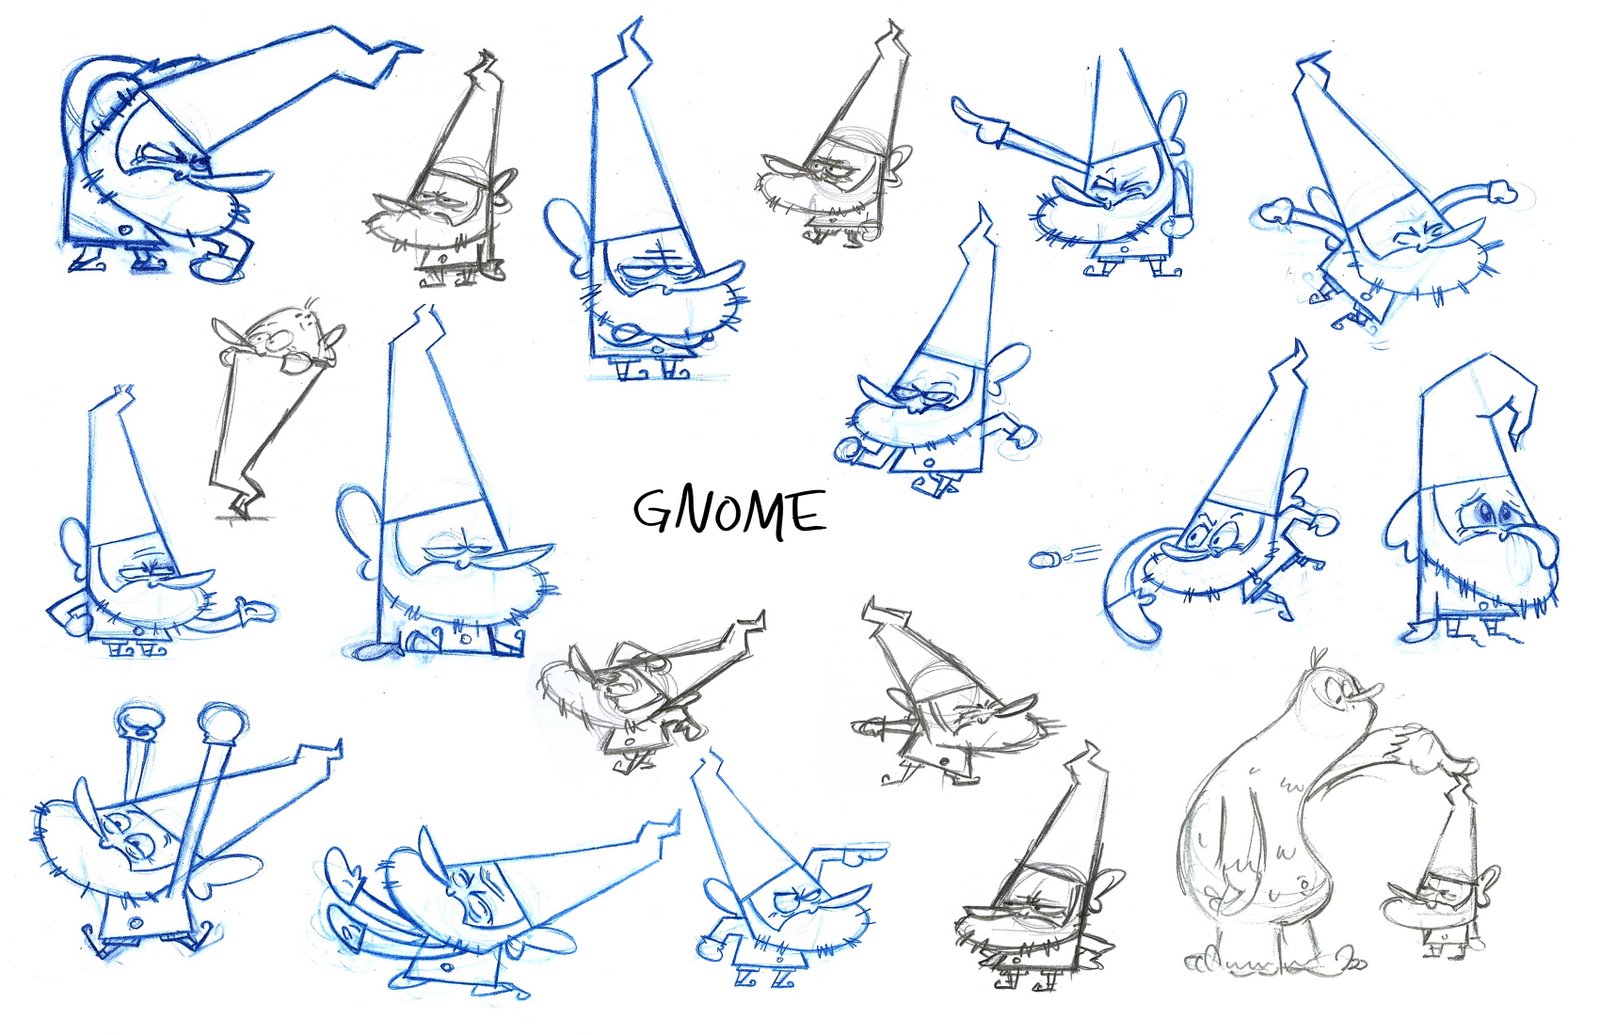 [gnome_composite.jpg]